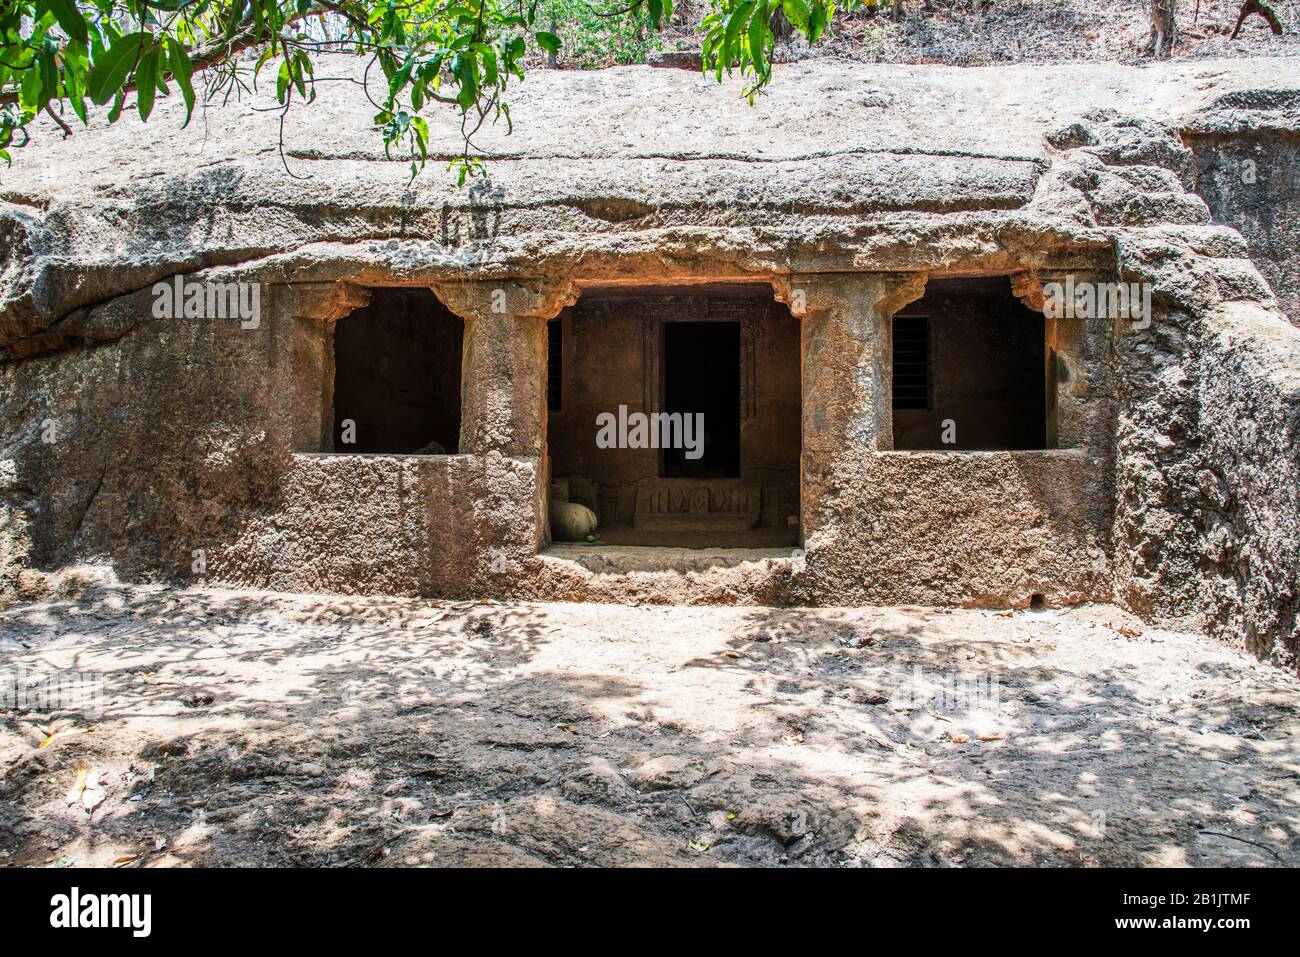 Panhale Kaji o Panhalakaji Grotte, District- Sindhudurg, Maharashtra, India : façade della Grotta n° 6 che mostra due pilastri e pilastri semplici. Foto Stock